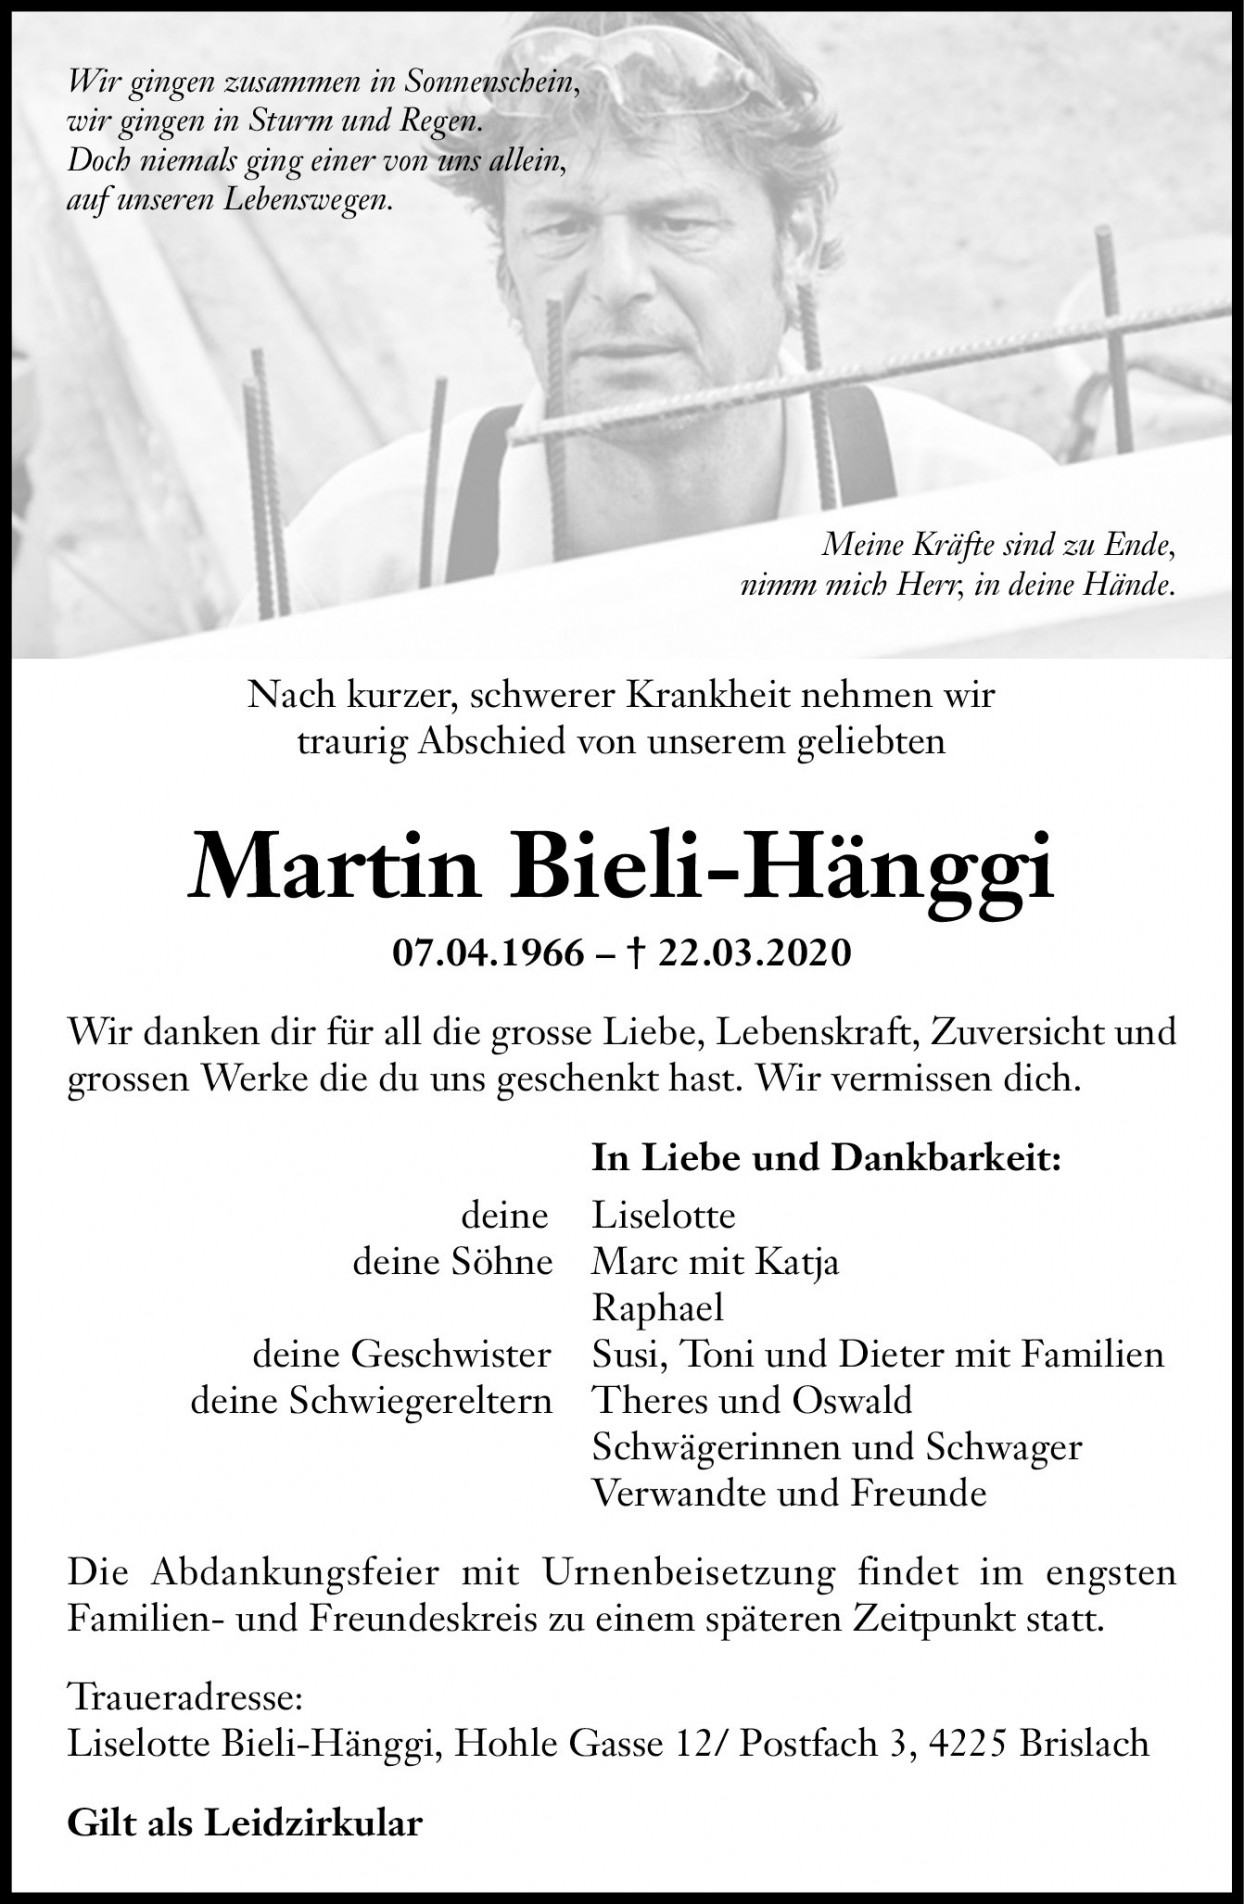 Martin Bieli-Hänggi